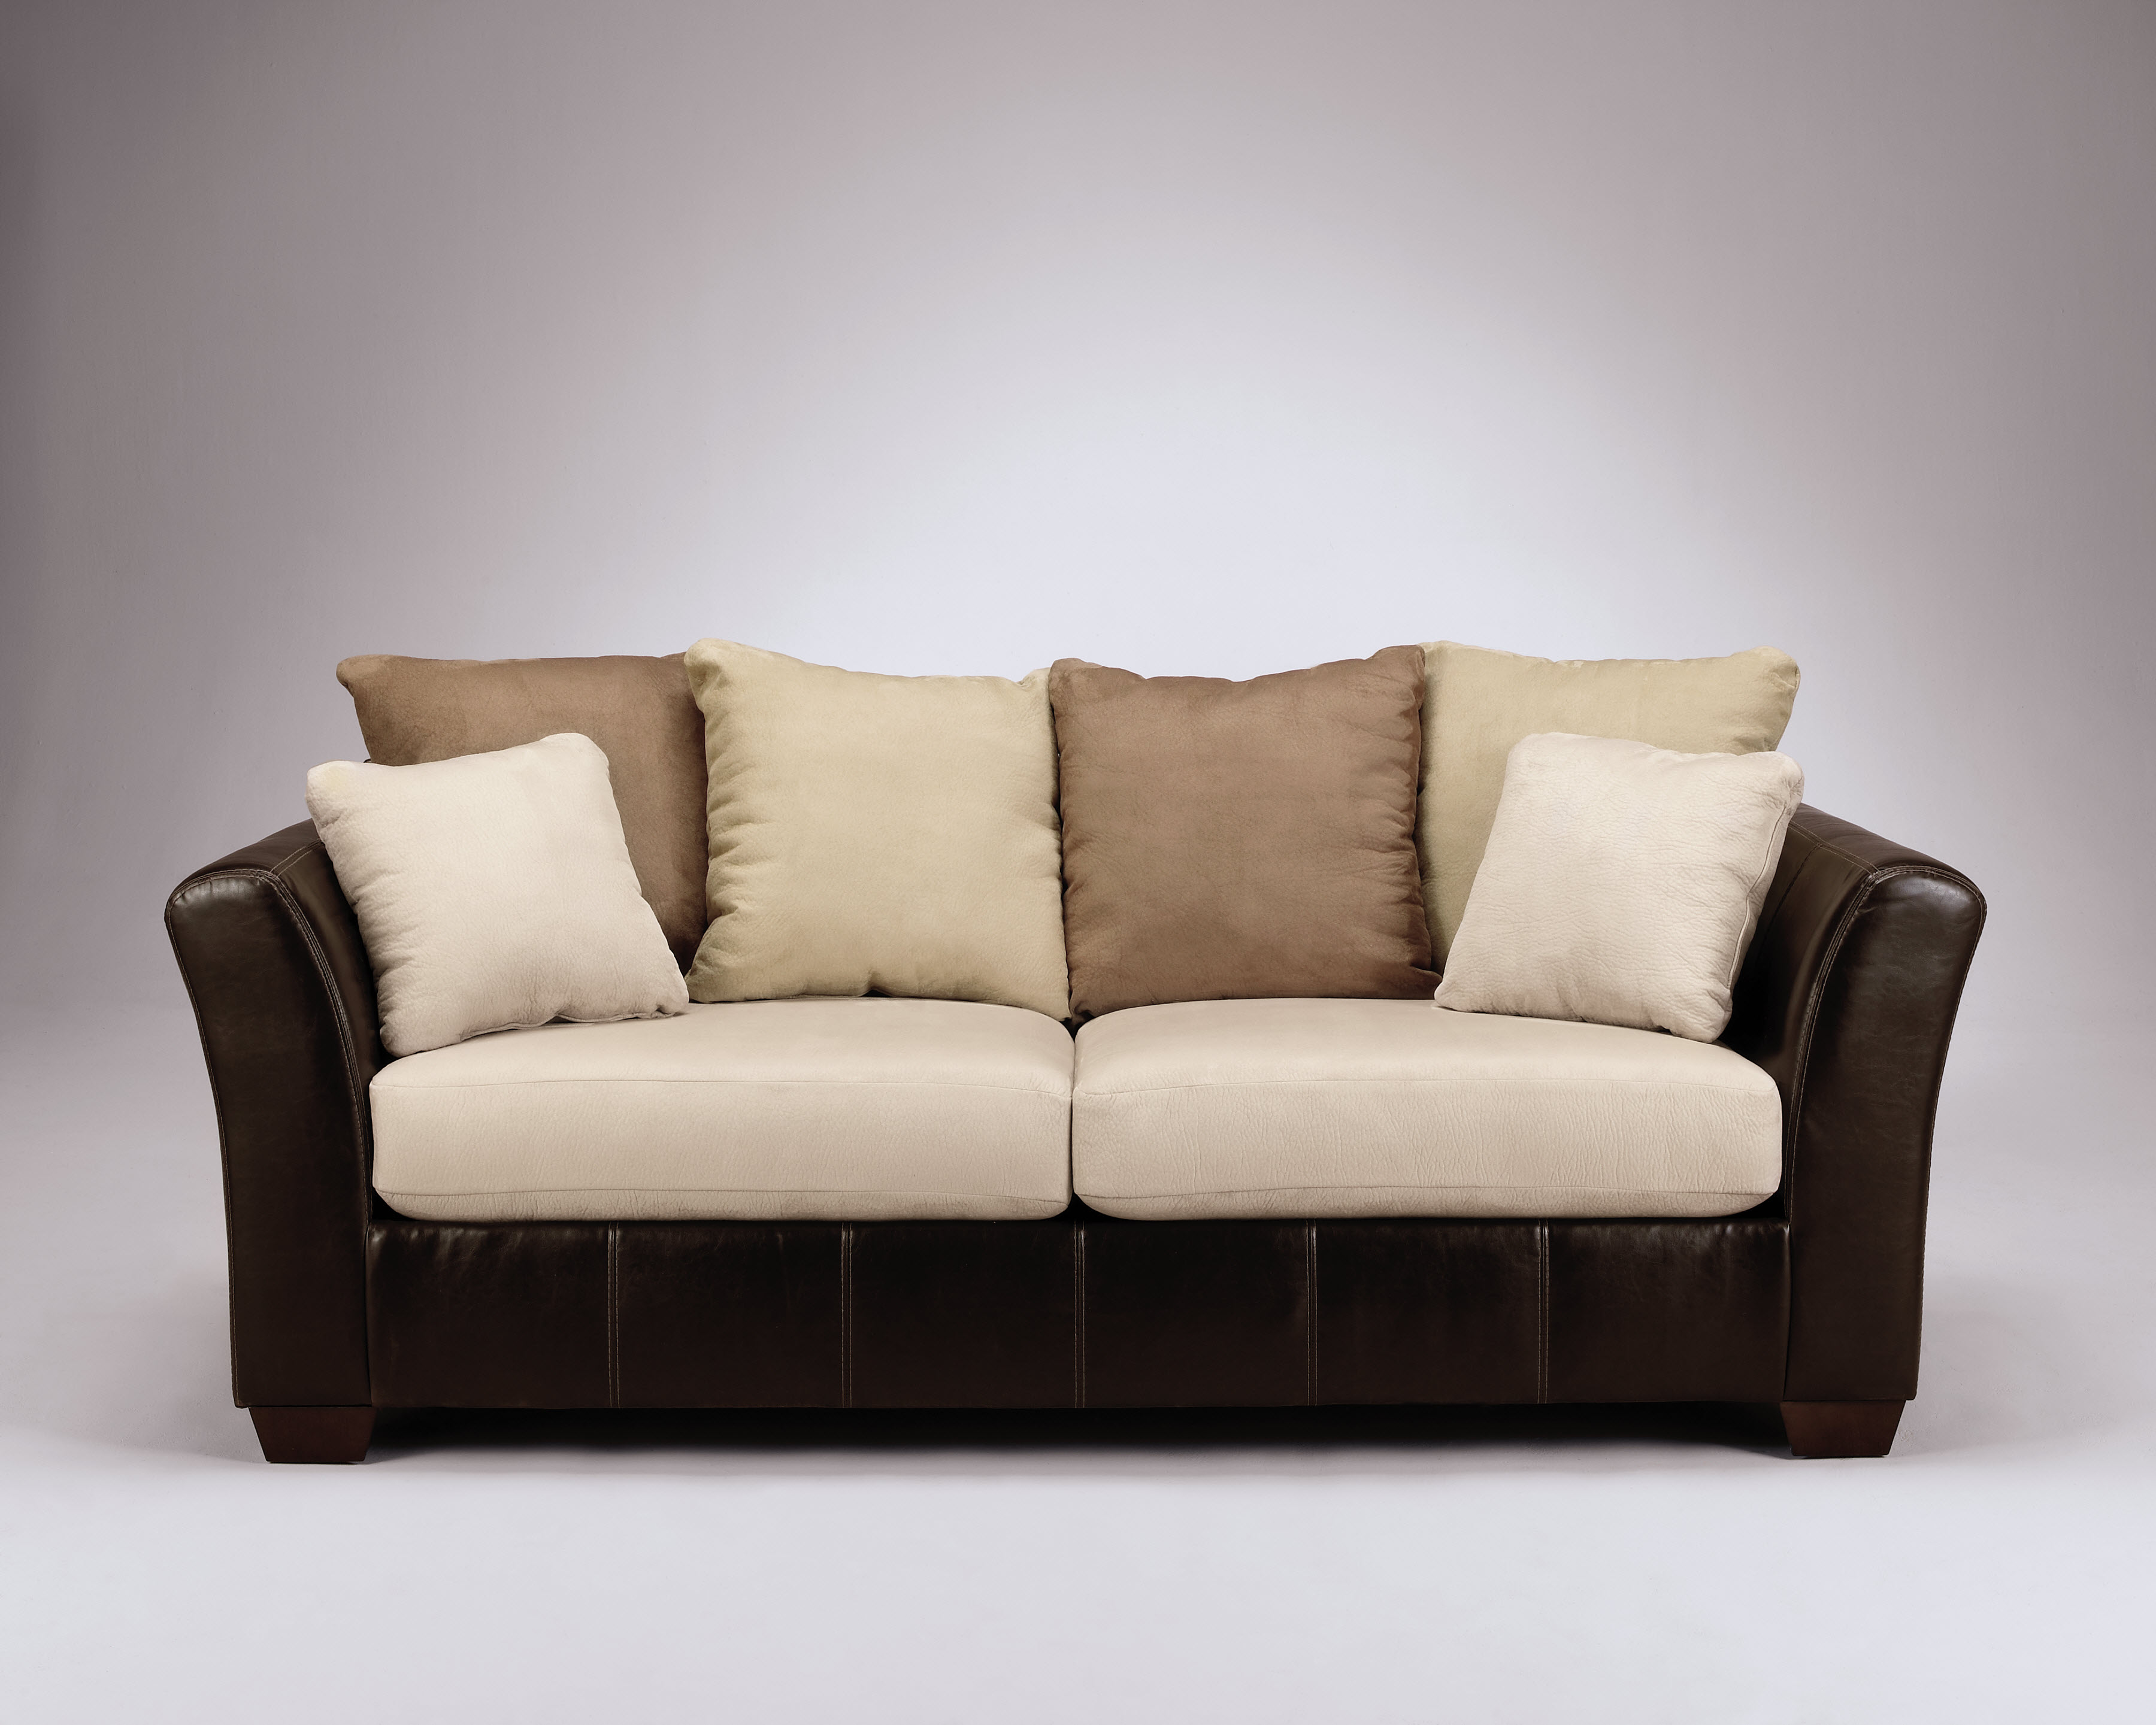 Ashley Furniture HomeStore Announces Launch of Biannual 